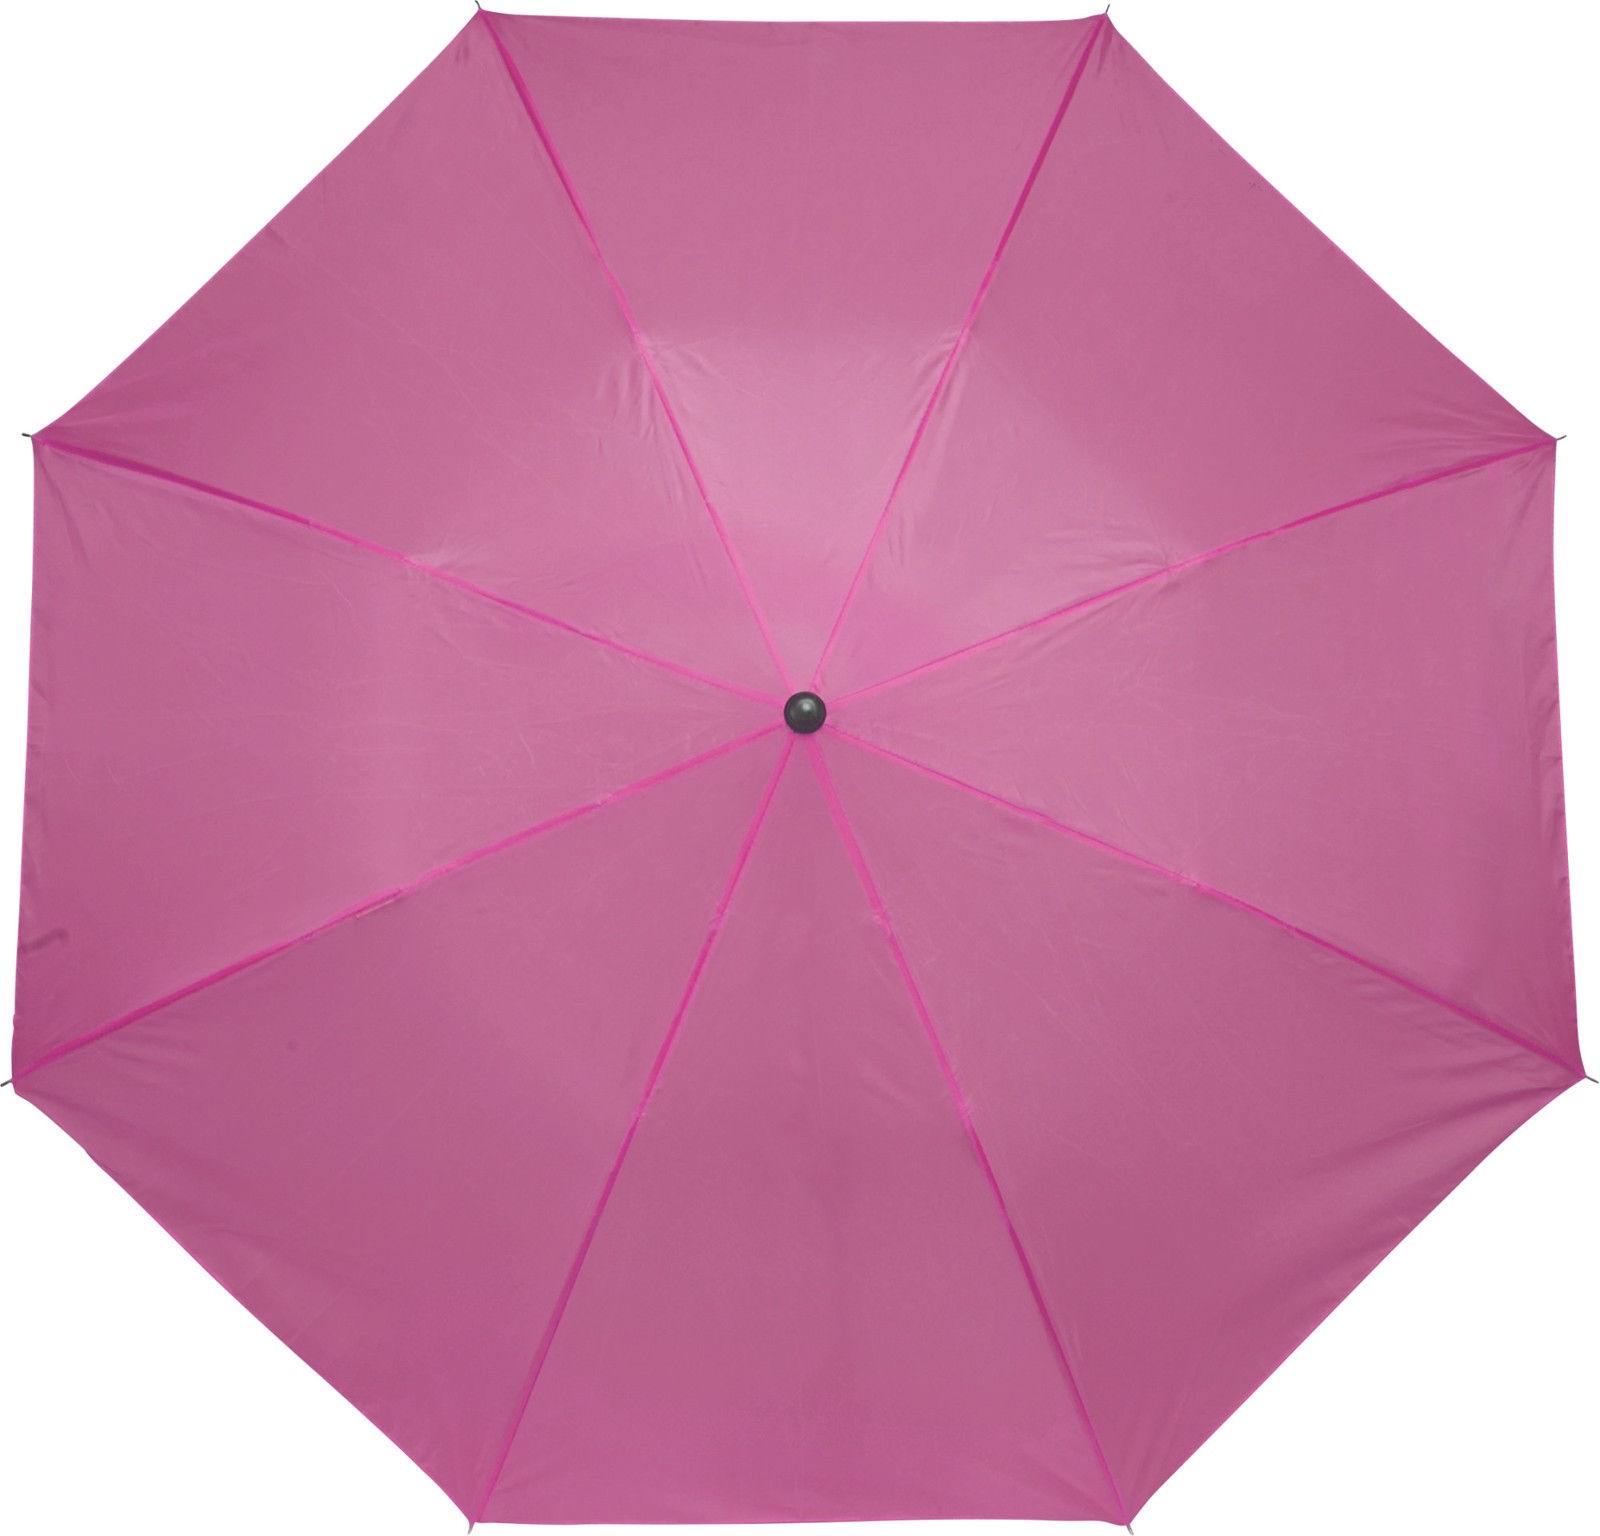 Polyester (190T) umbrella - Pink